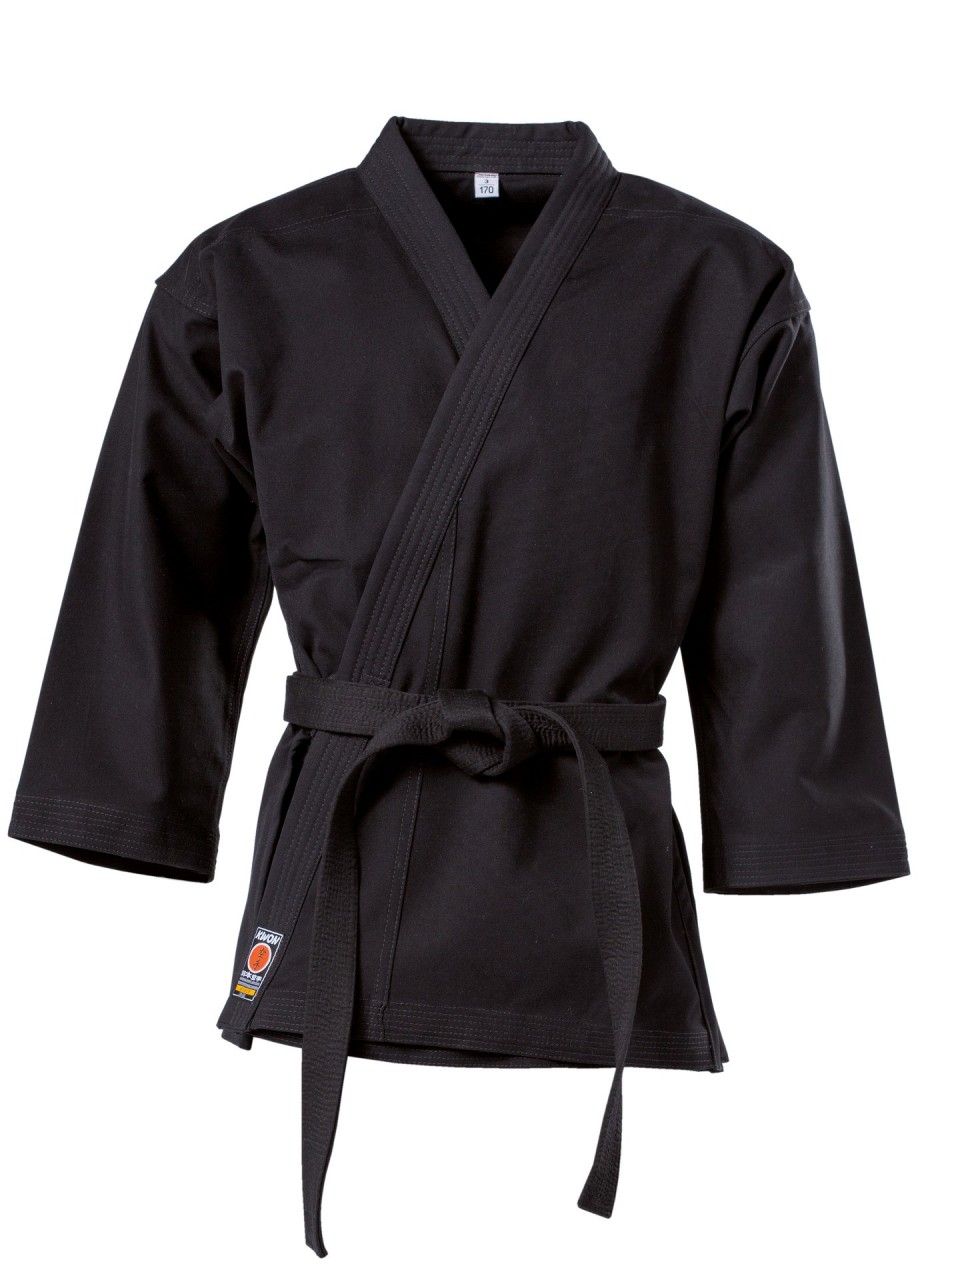 KWON Karatejacke Traditional 8 oz schwarz von KWON KG